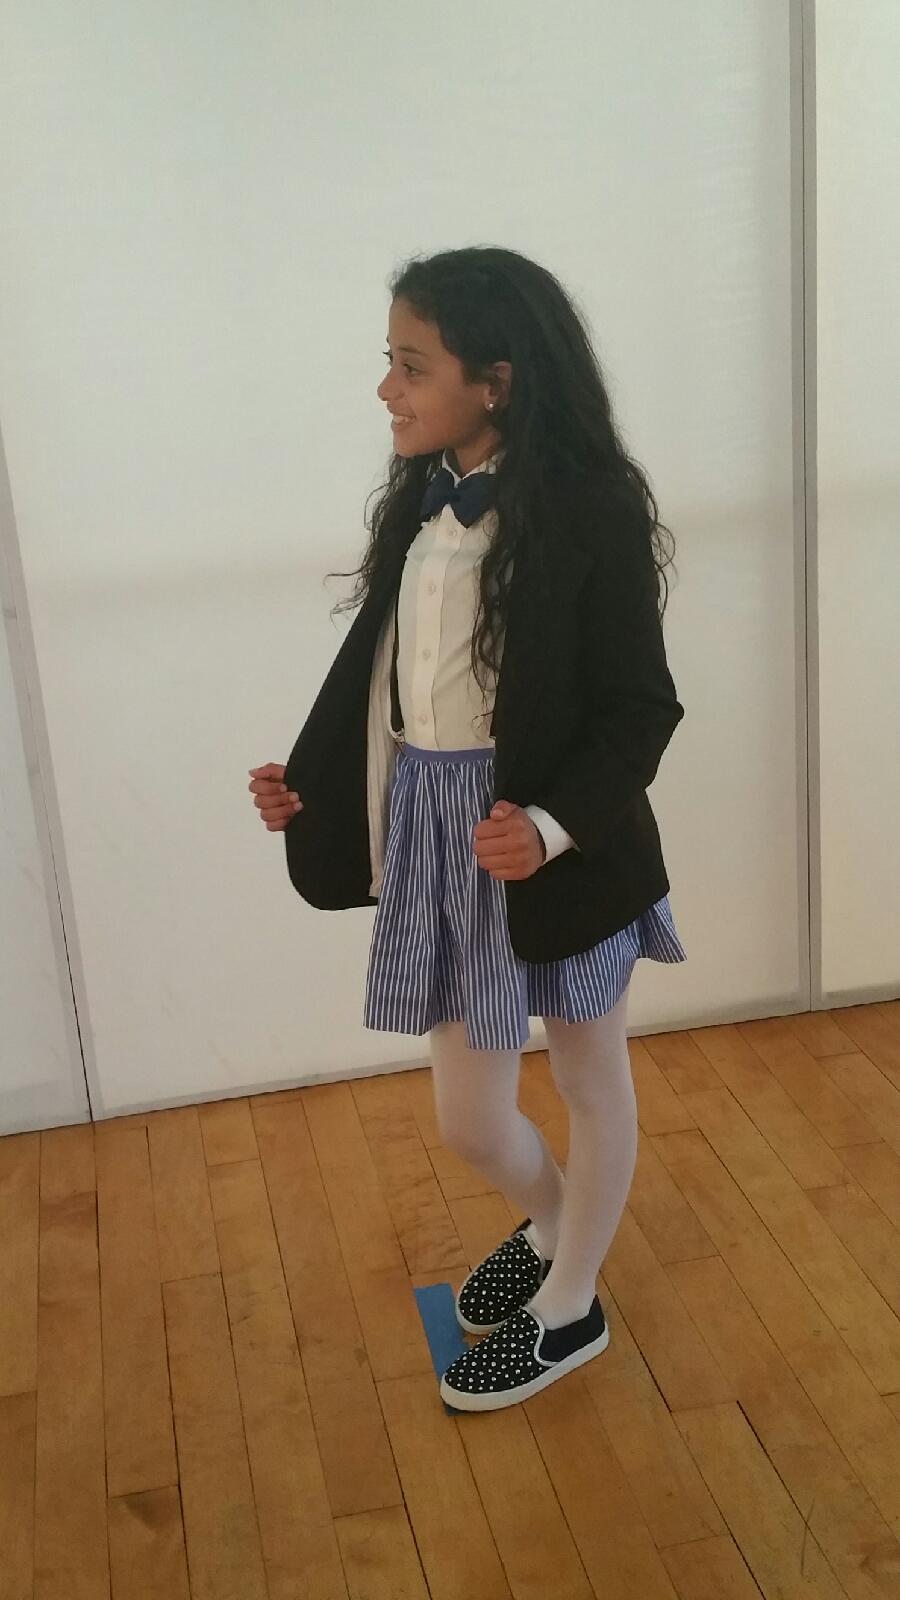 Dasani Age 8 June 2015 Dasani and her showing off her fashionistic self